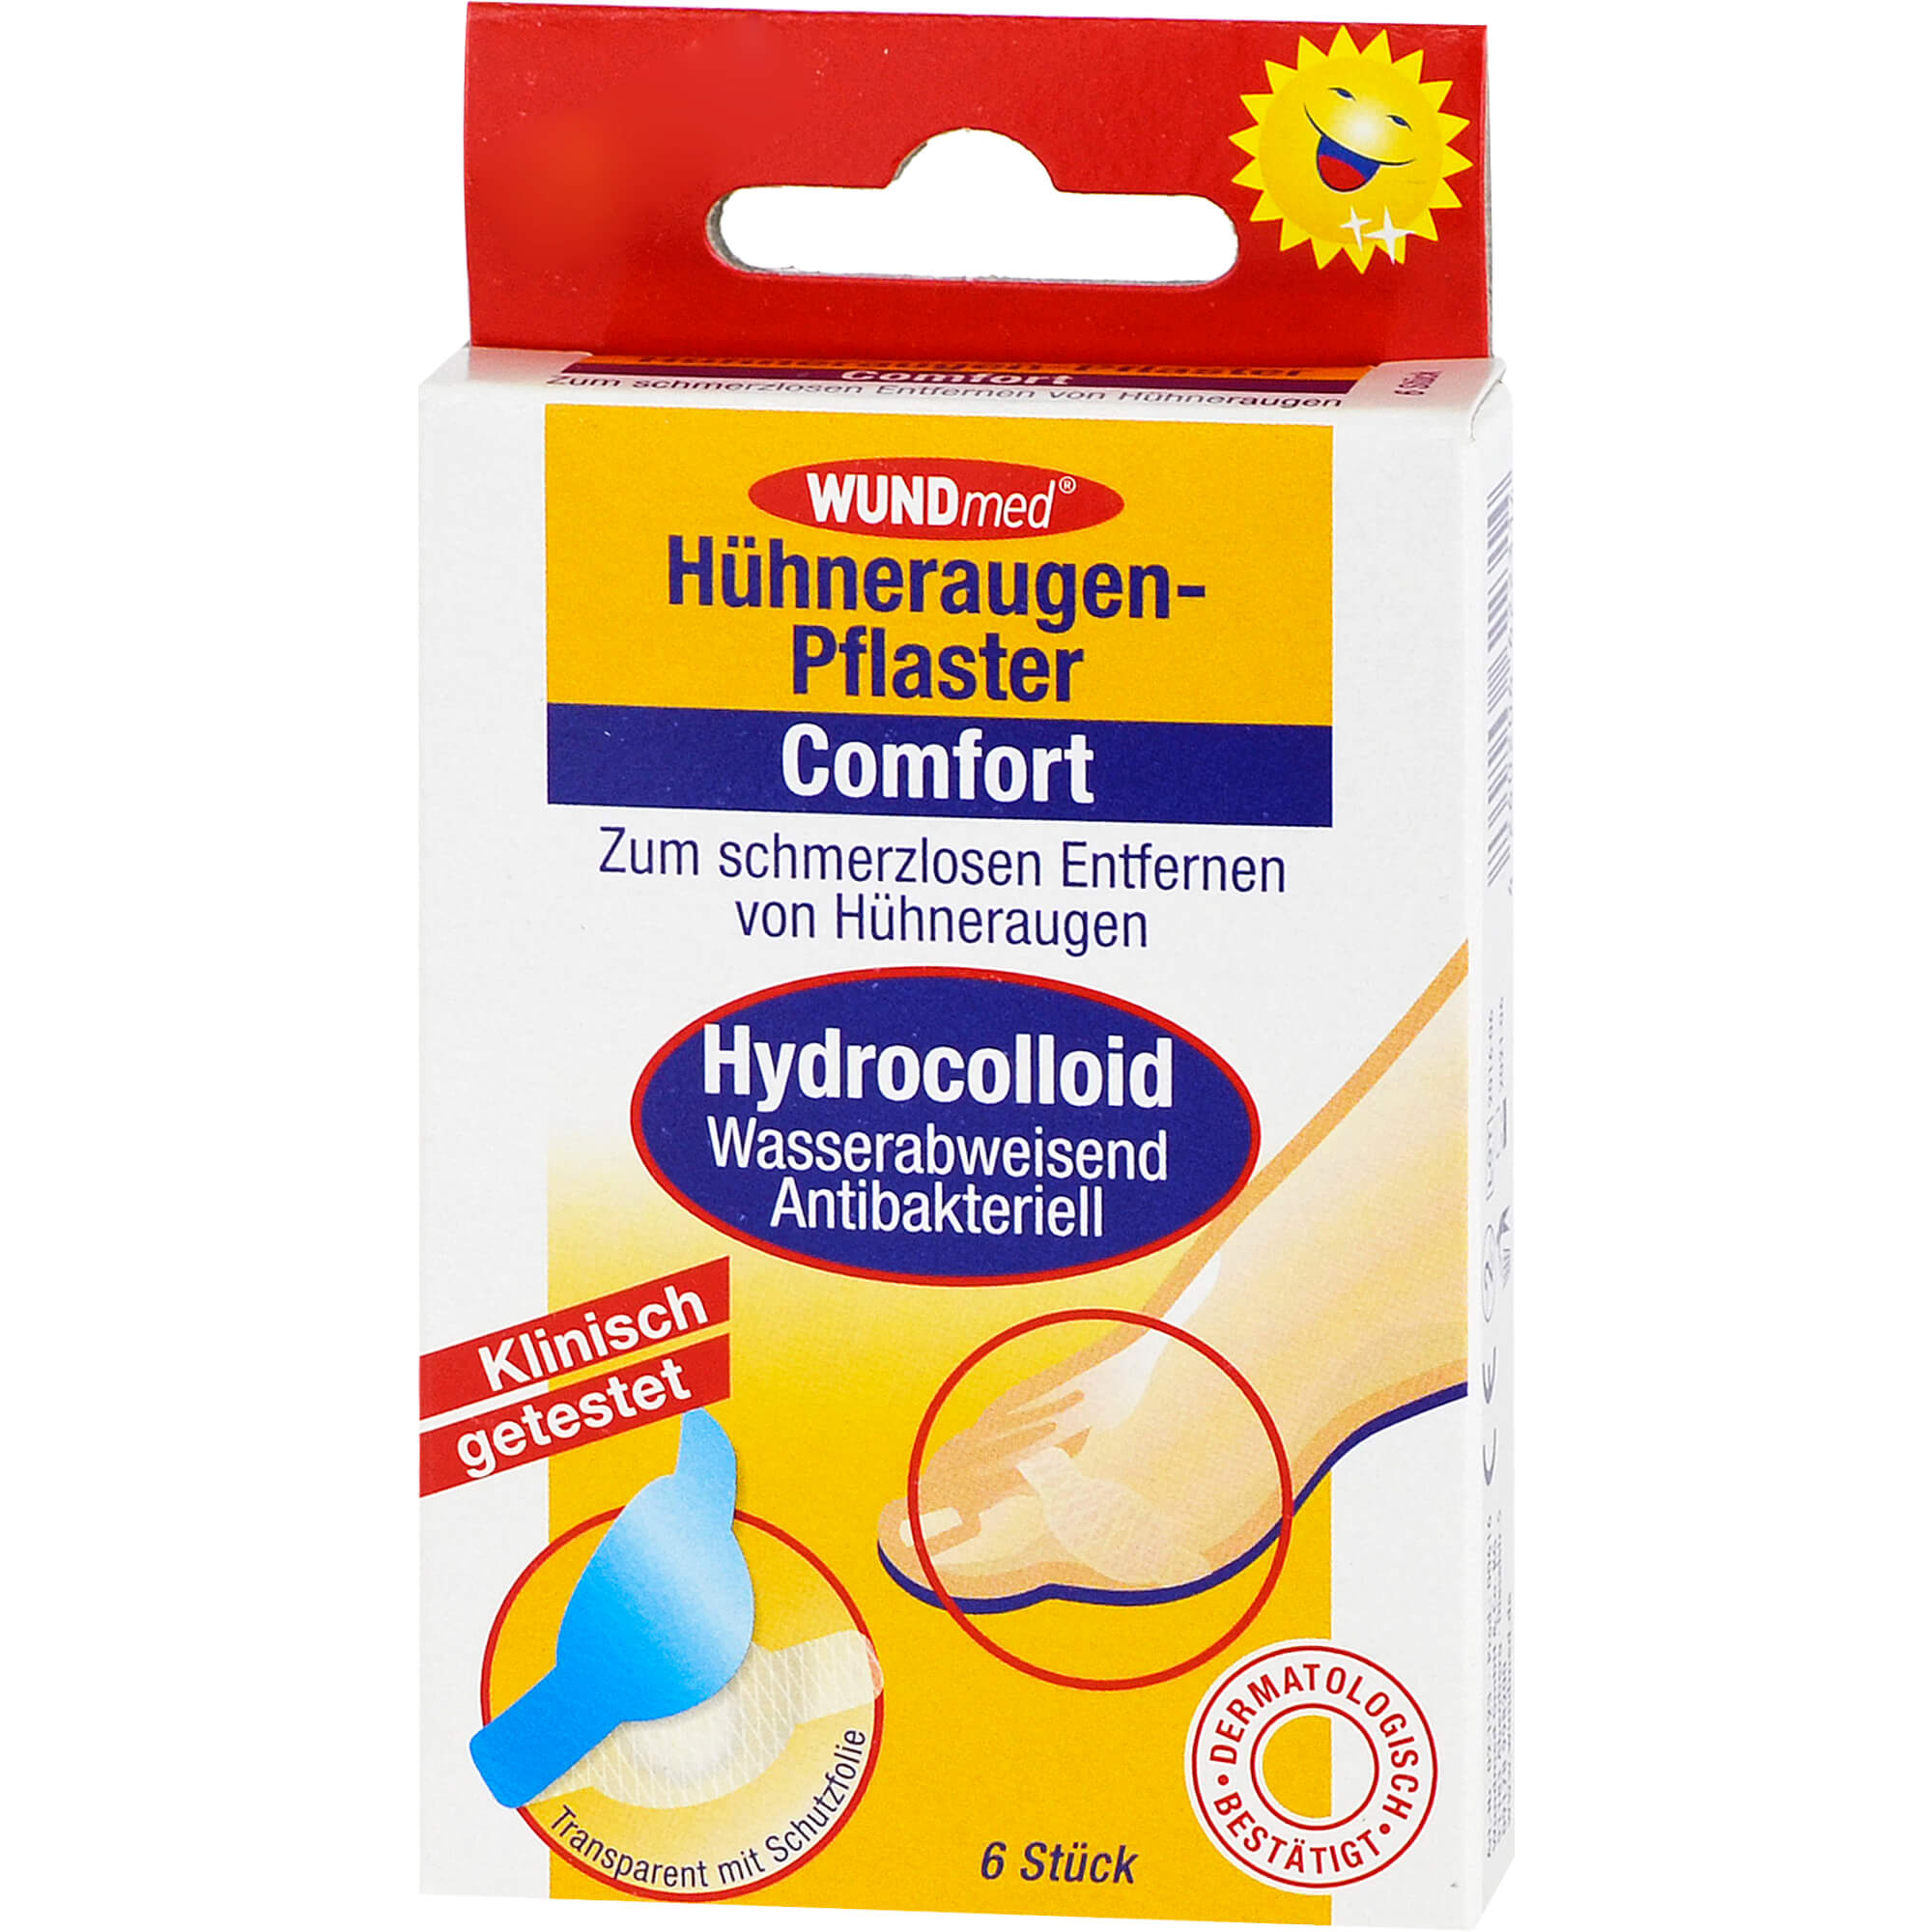 HÜHNERAUGENPFLASTER Comfort hydrocolloid